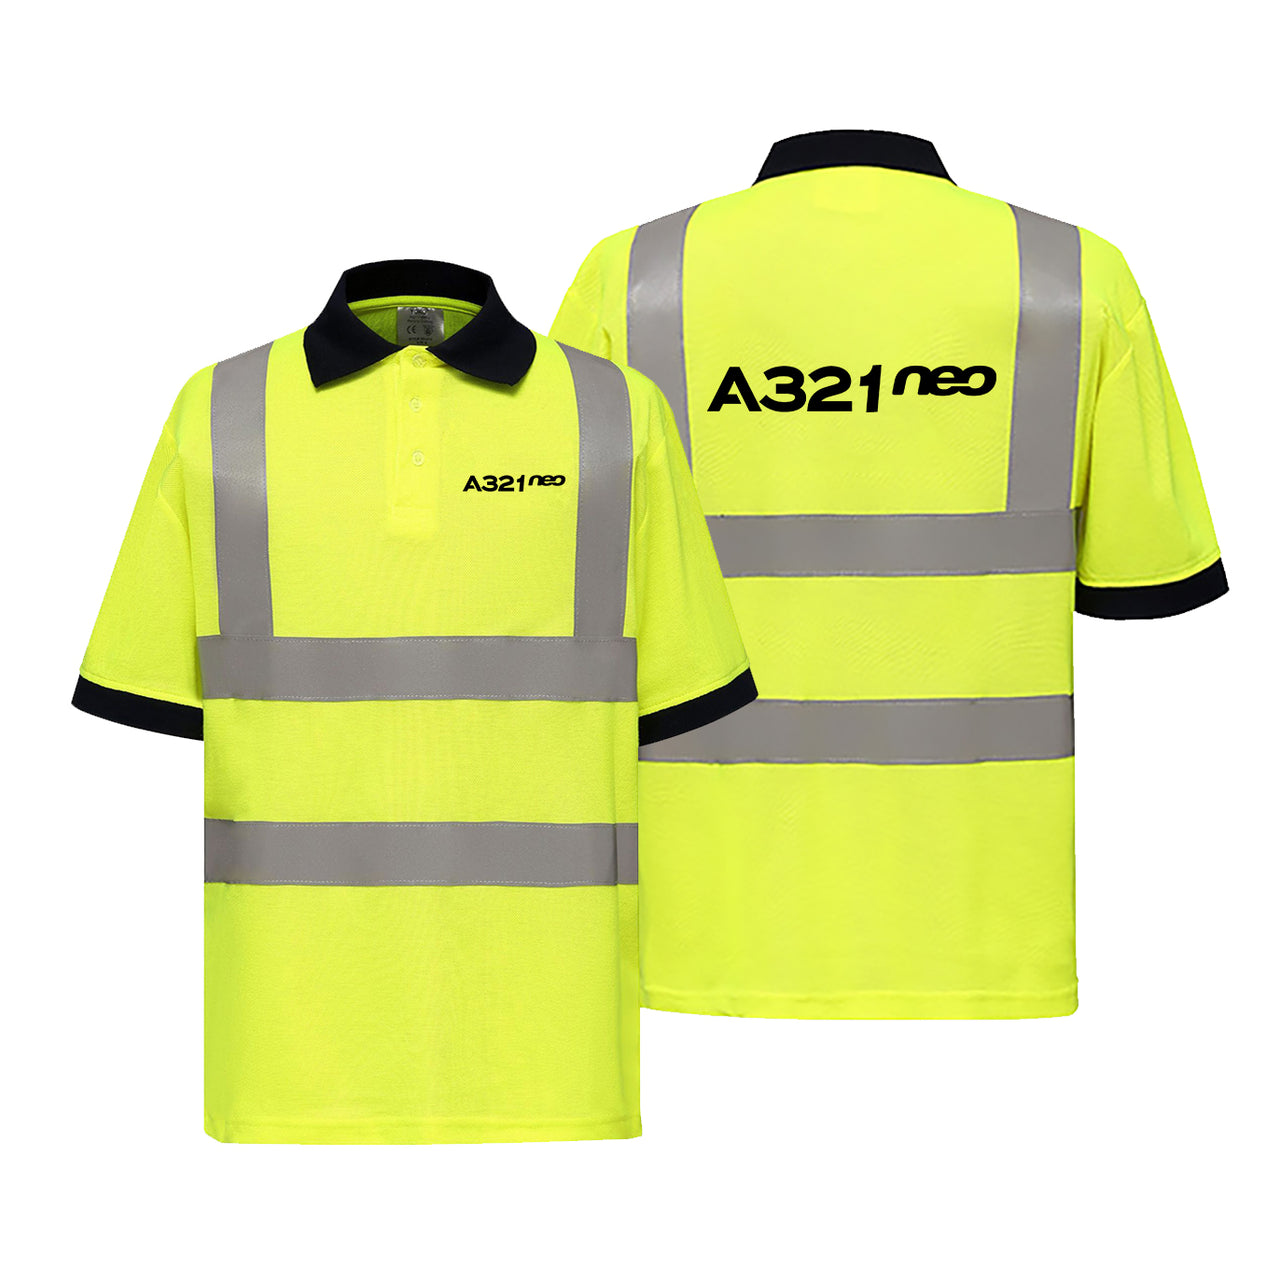 A321neo & Text Designed Reflective Polo T-Shirts